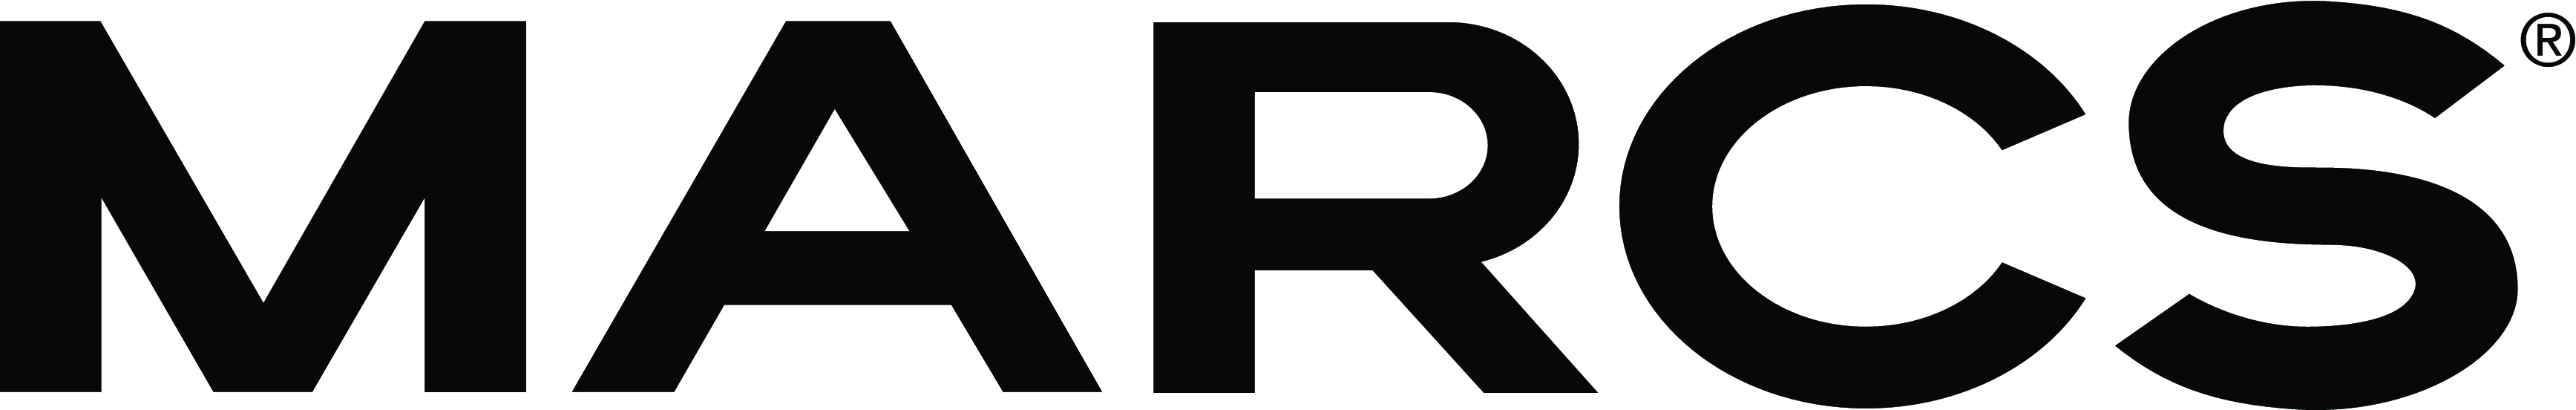 MARCS logo